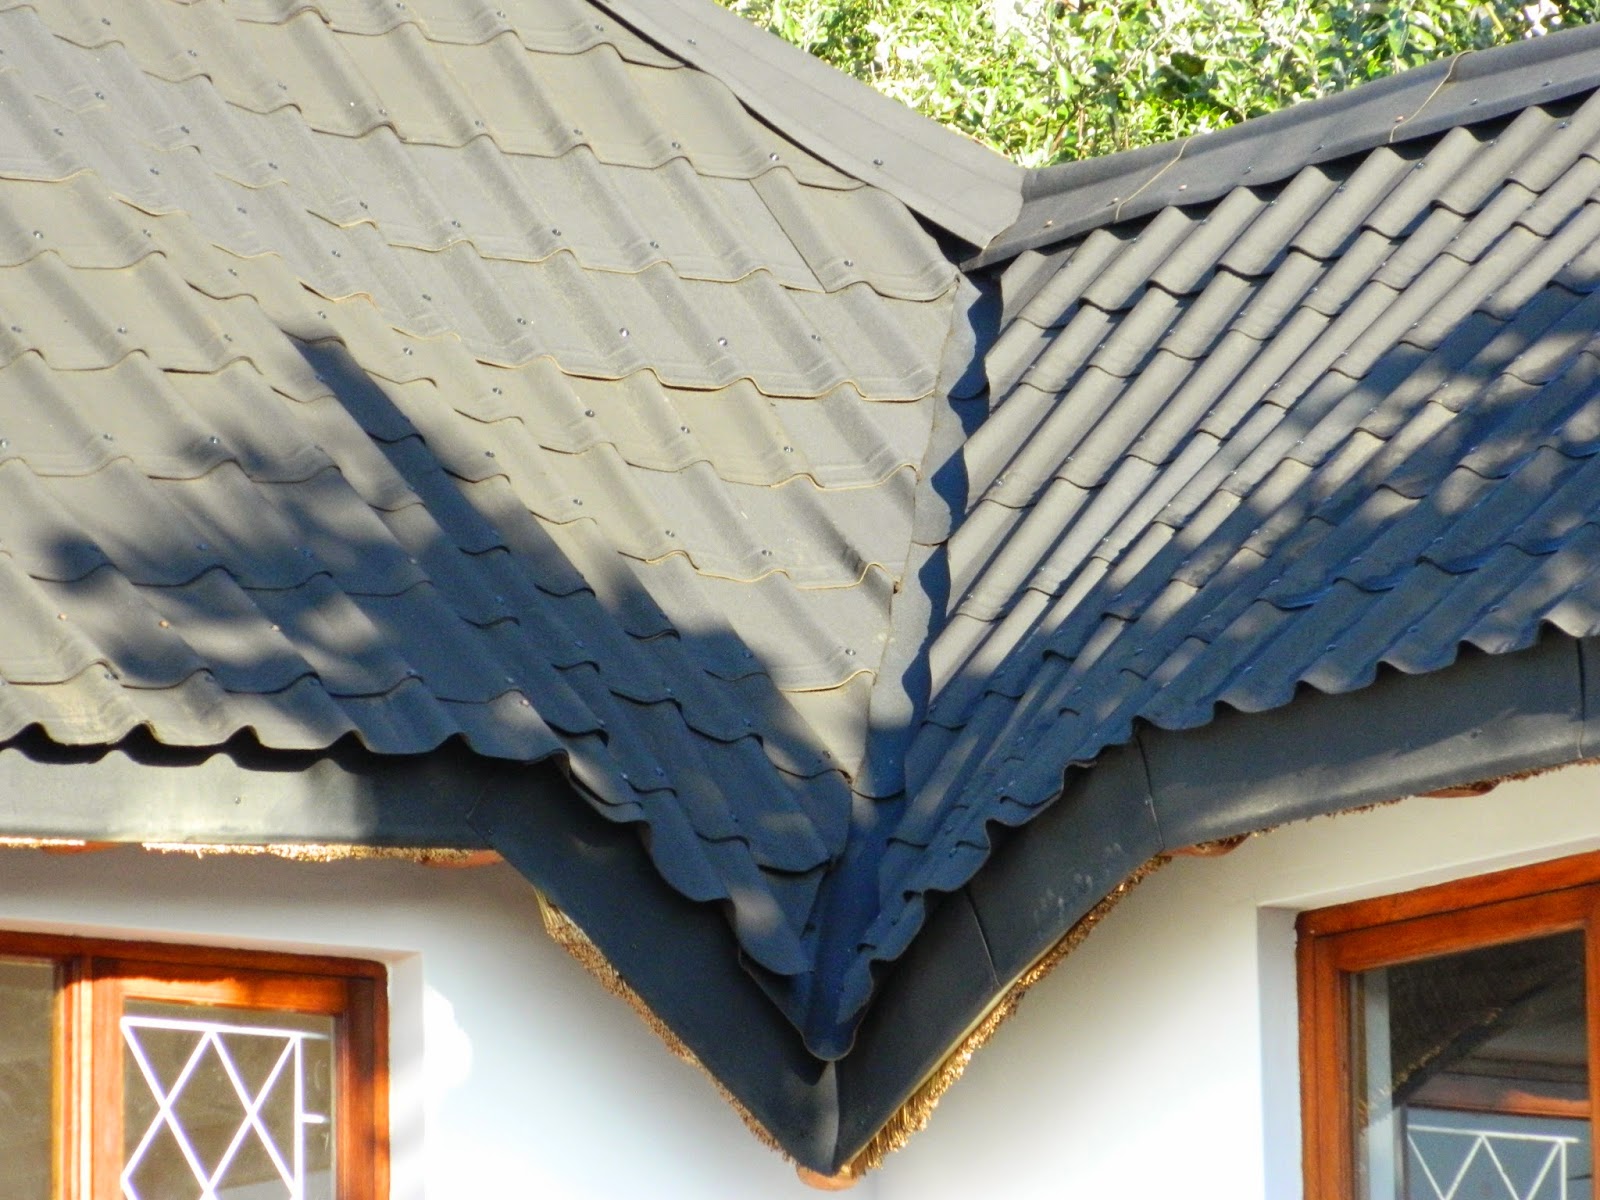 Change a Thatch Roof to Onduvilla Tiles